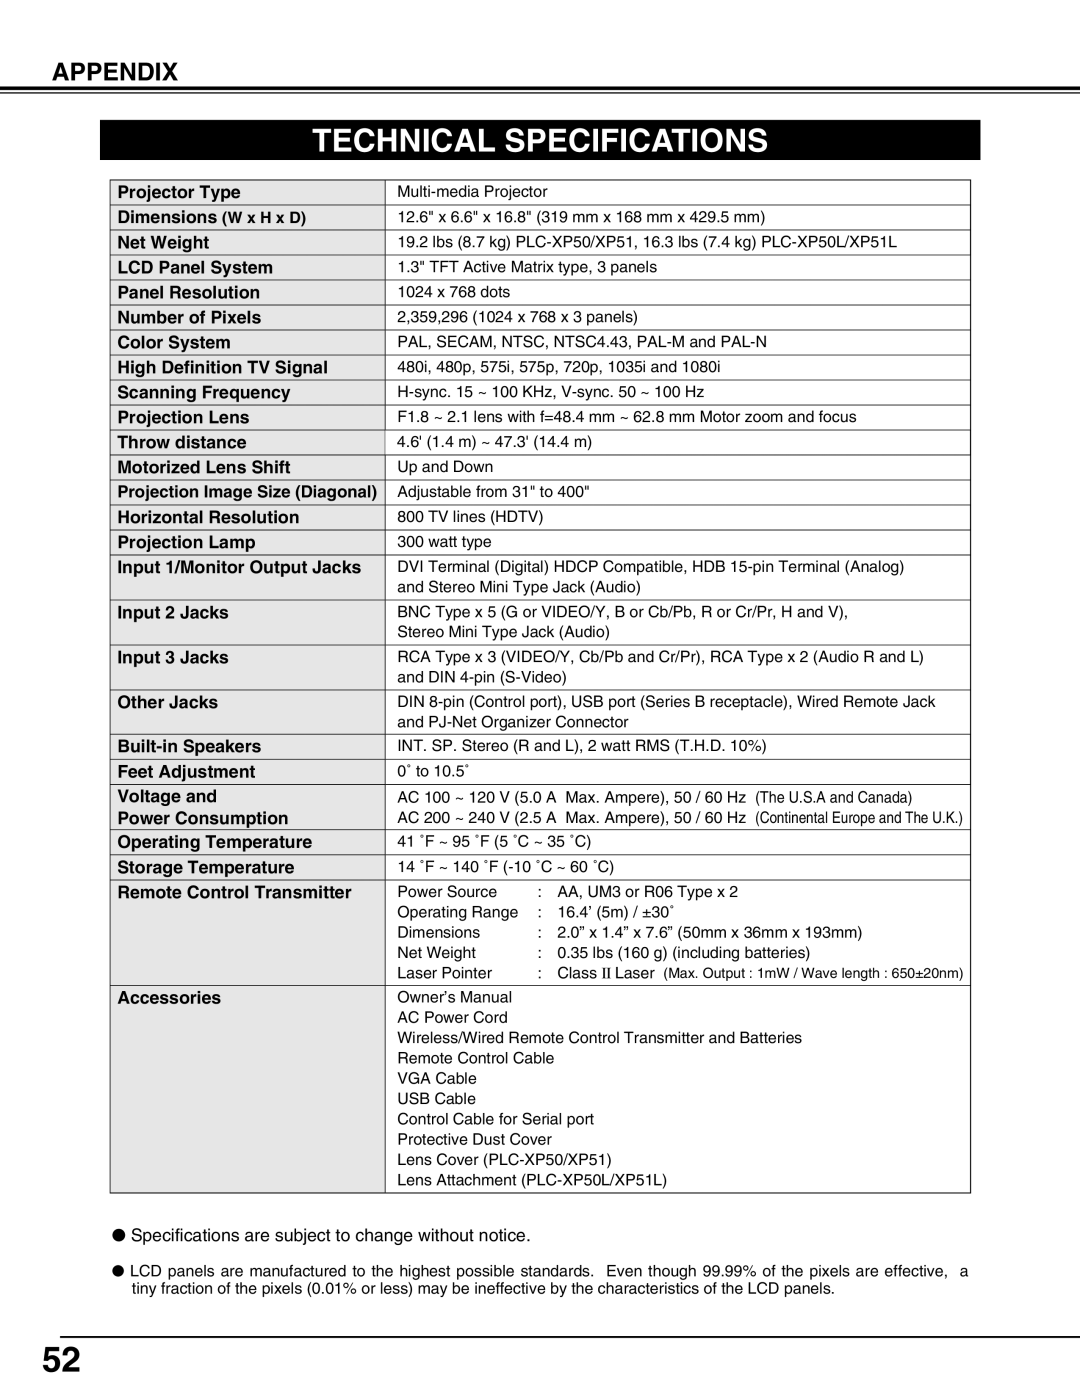 Sanyo XP51L, PLC-XP50L owner manual Technical Specifications, Appendix 